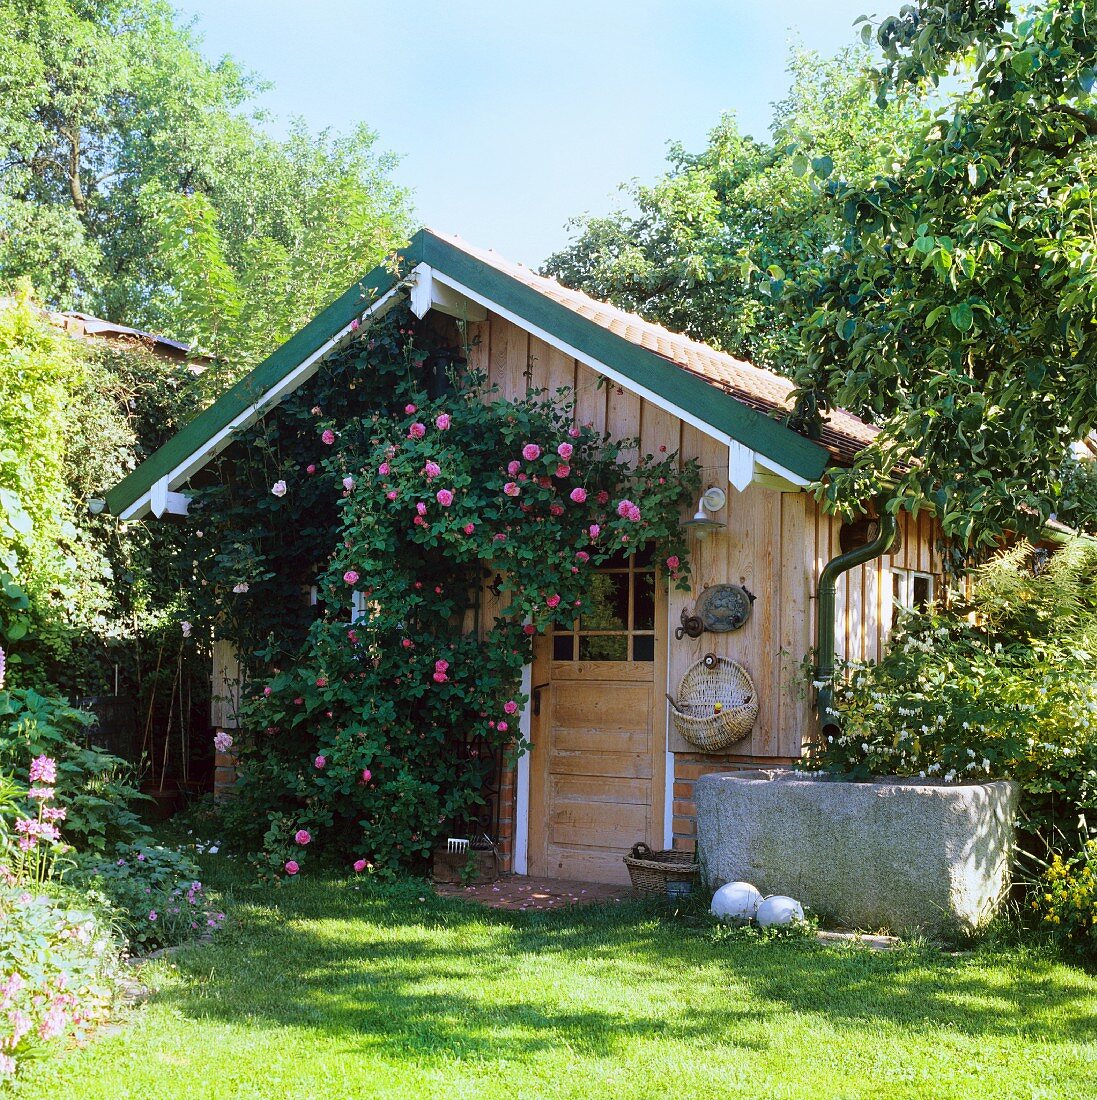 Flowering climbing rose on wooden garden shed